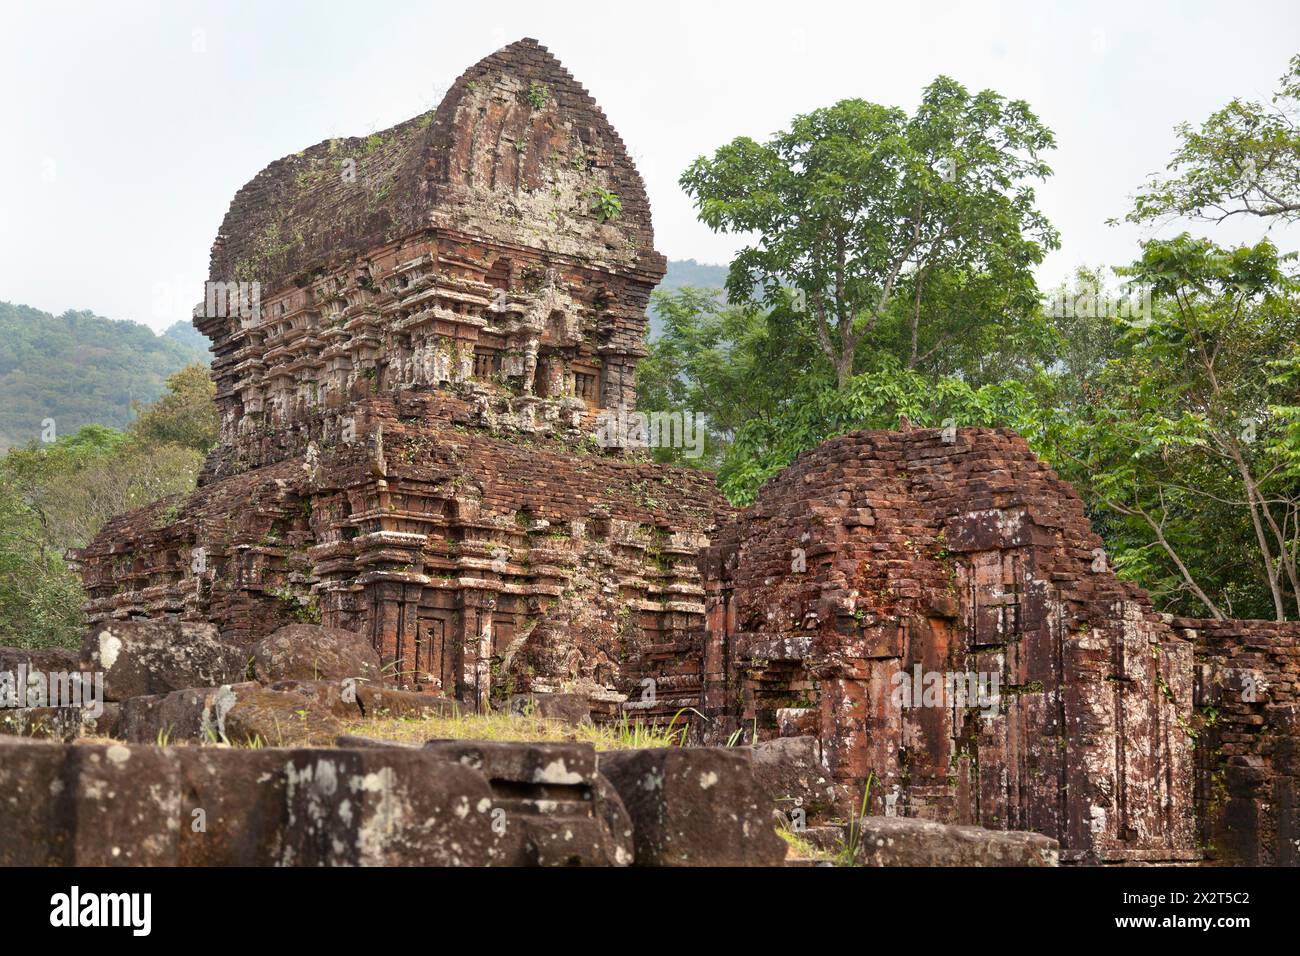 My Son, Cham arcaelogical site, Hindu temples, Vietnam Stock Photo